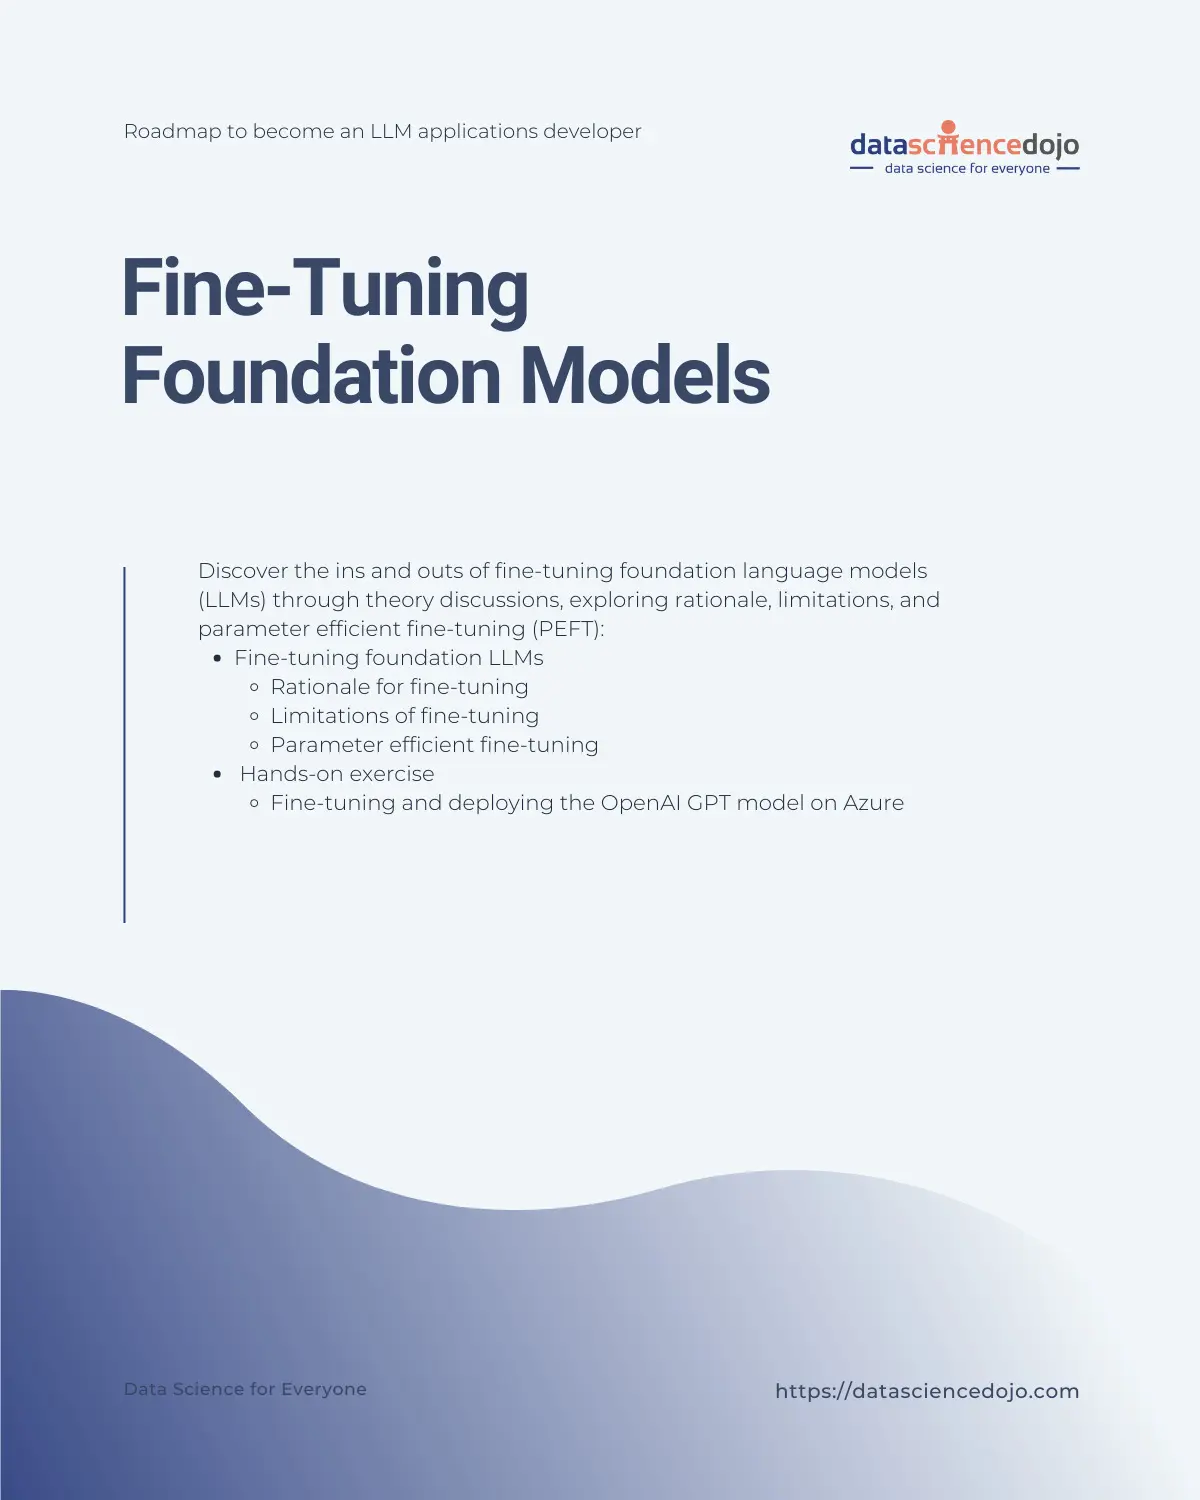 Fine-tuning of Foundation Models - LLM Bootcamp Data Science Dojo